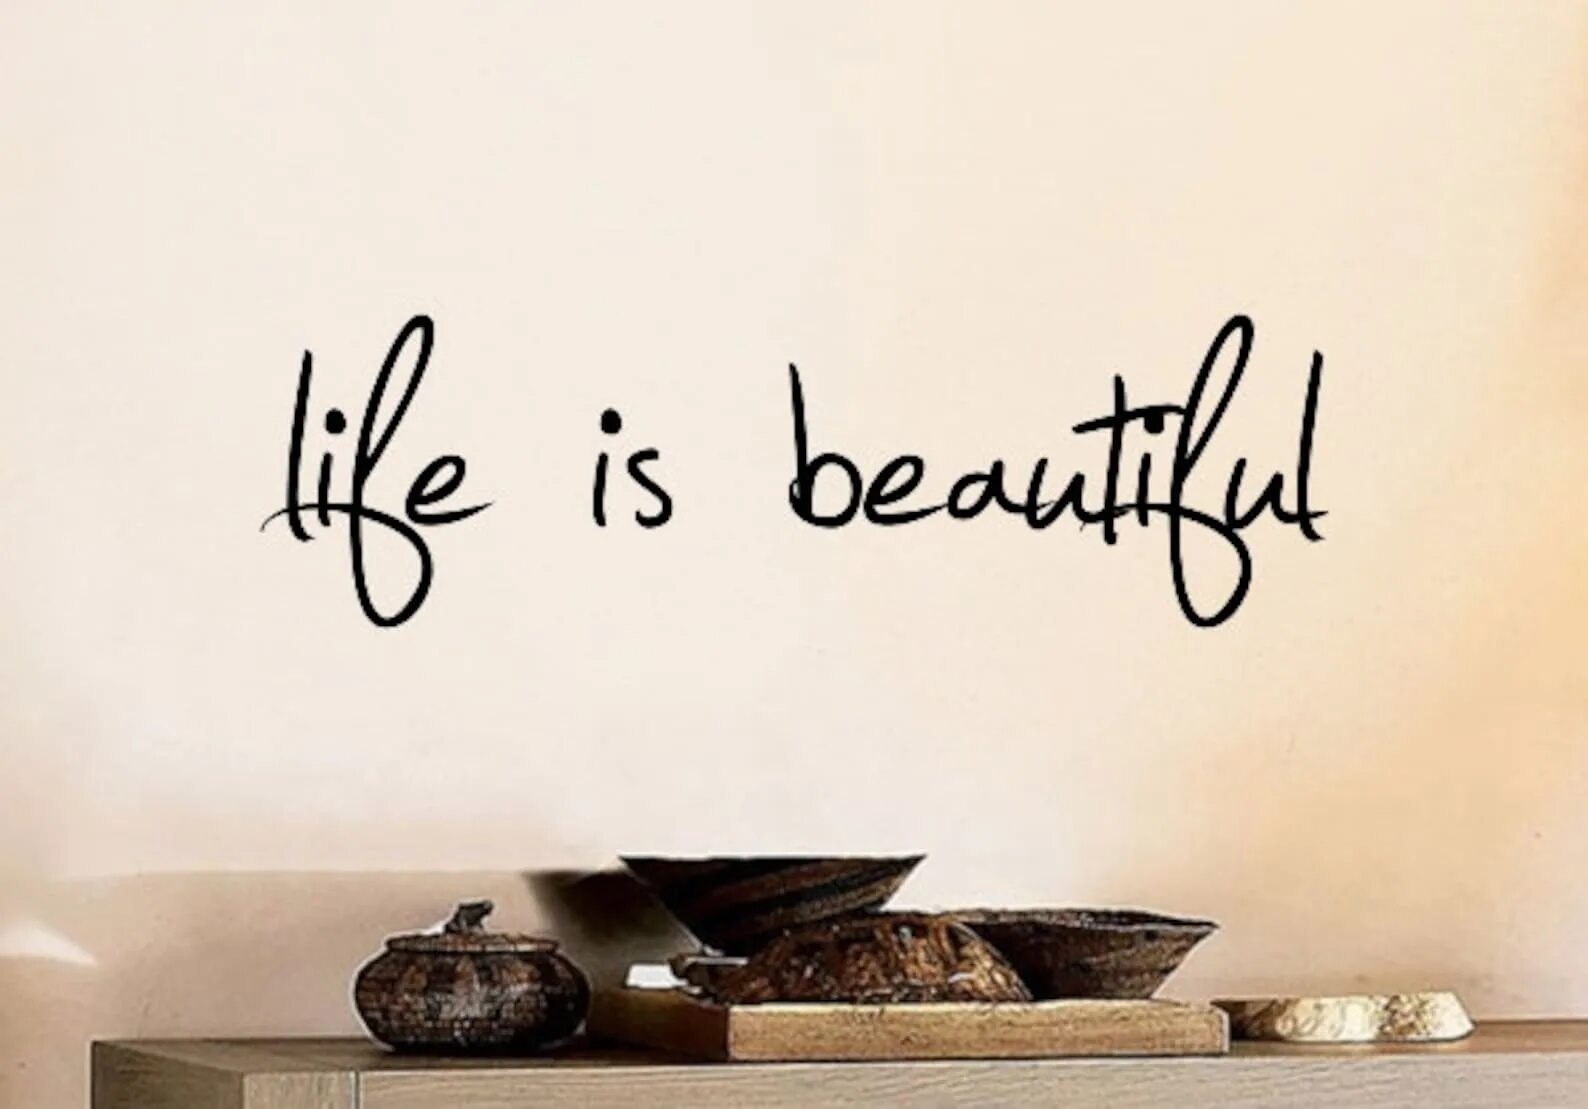 Переведи is beautiful. Life надпись. Жизнь прекрасна надпись. Life is beautiful надпись. Life is beautiful красивая надпись.